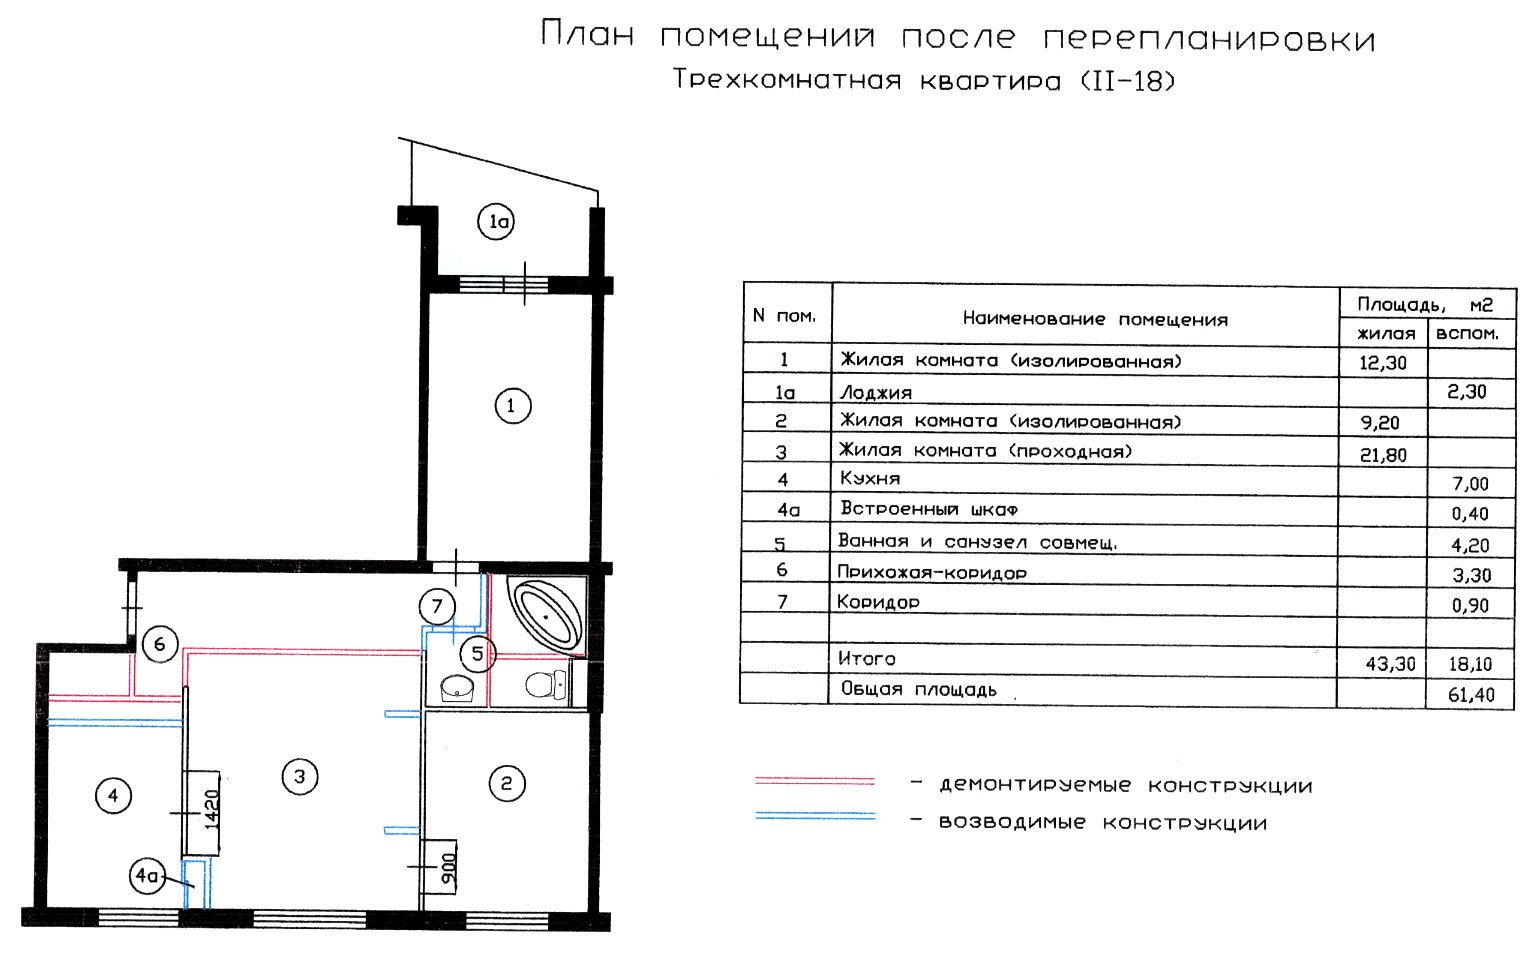 II-18 вариант перепланировки трехкомнатной квартиры